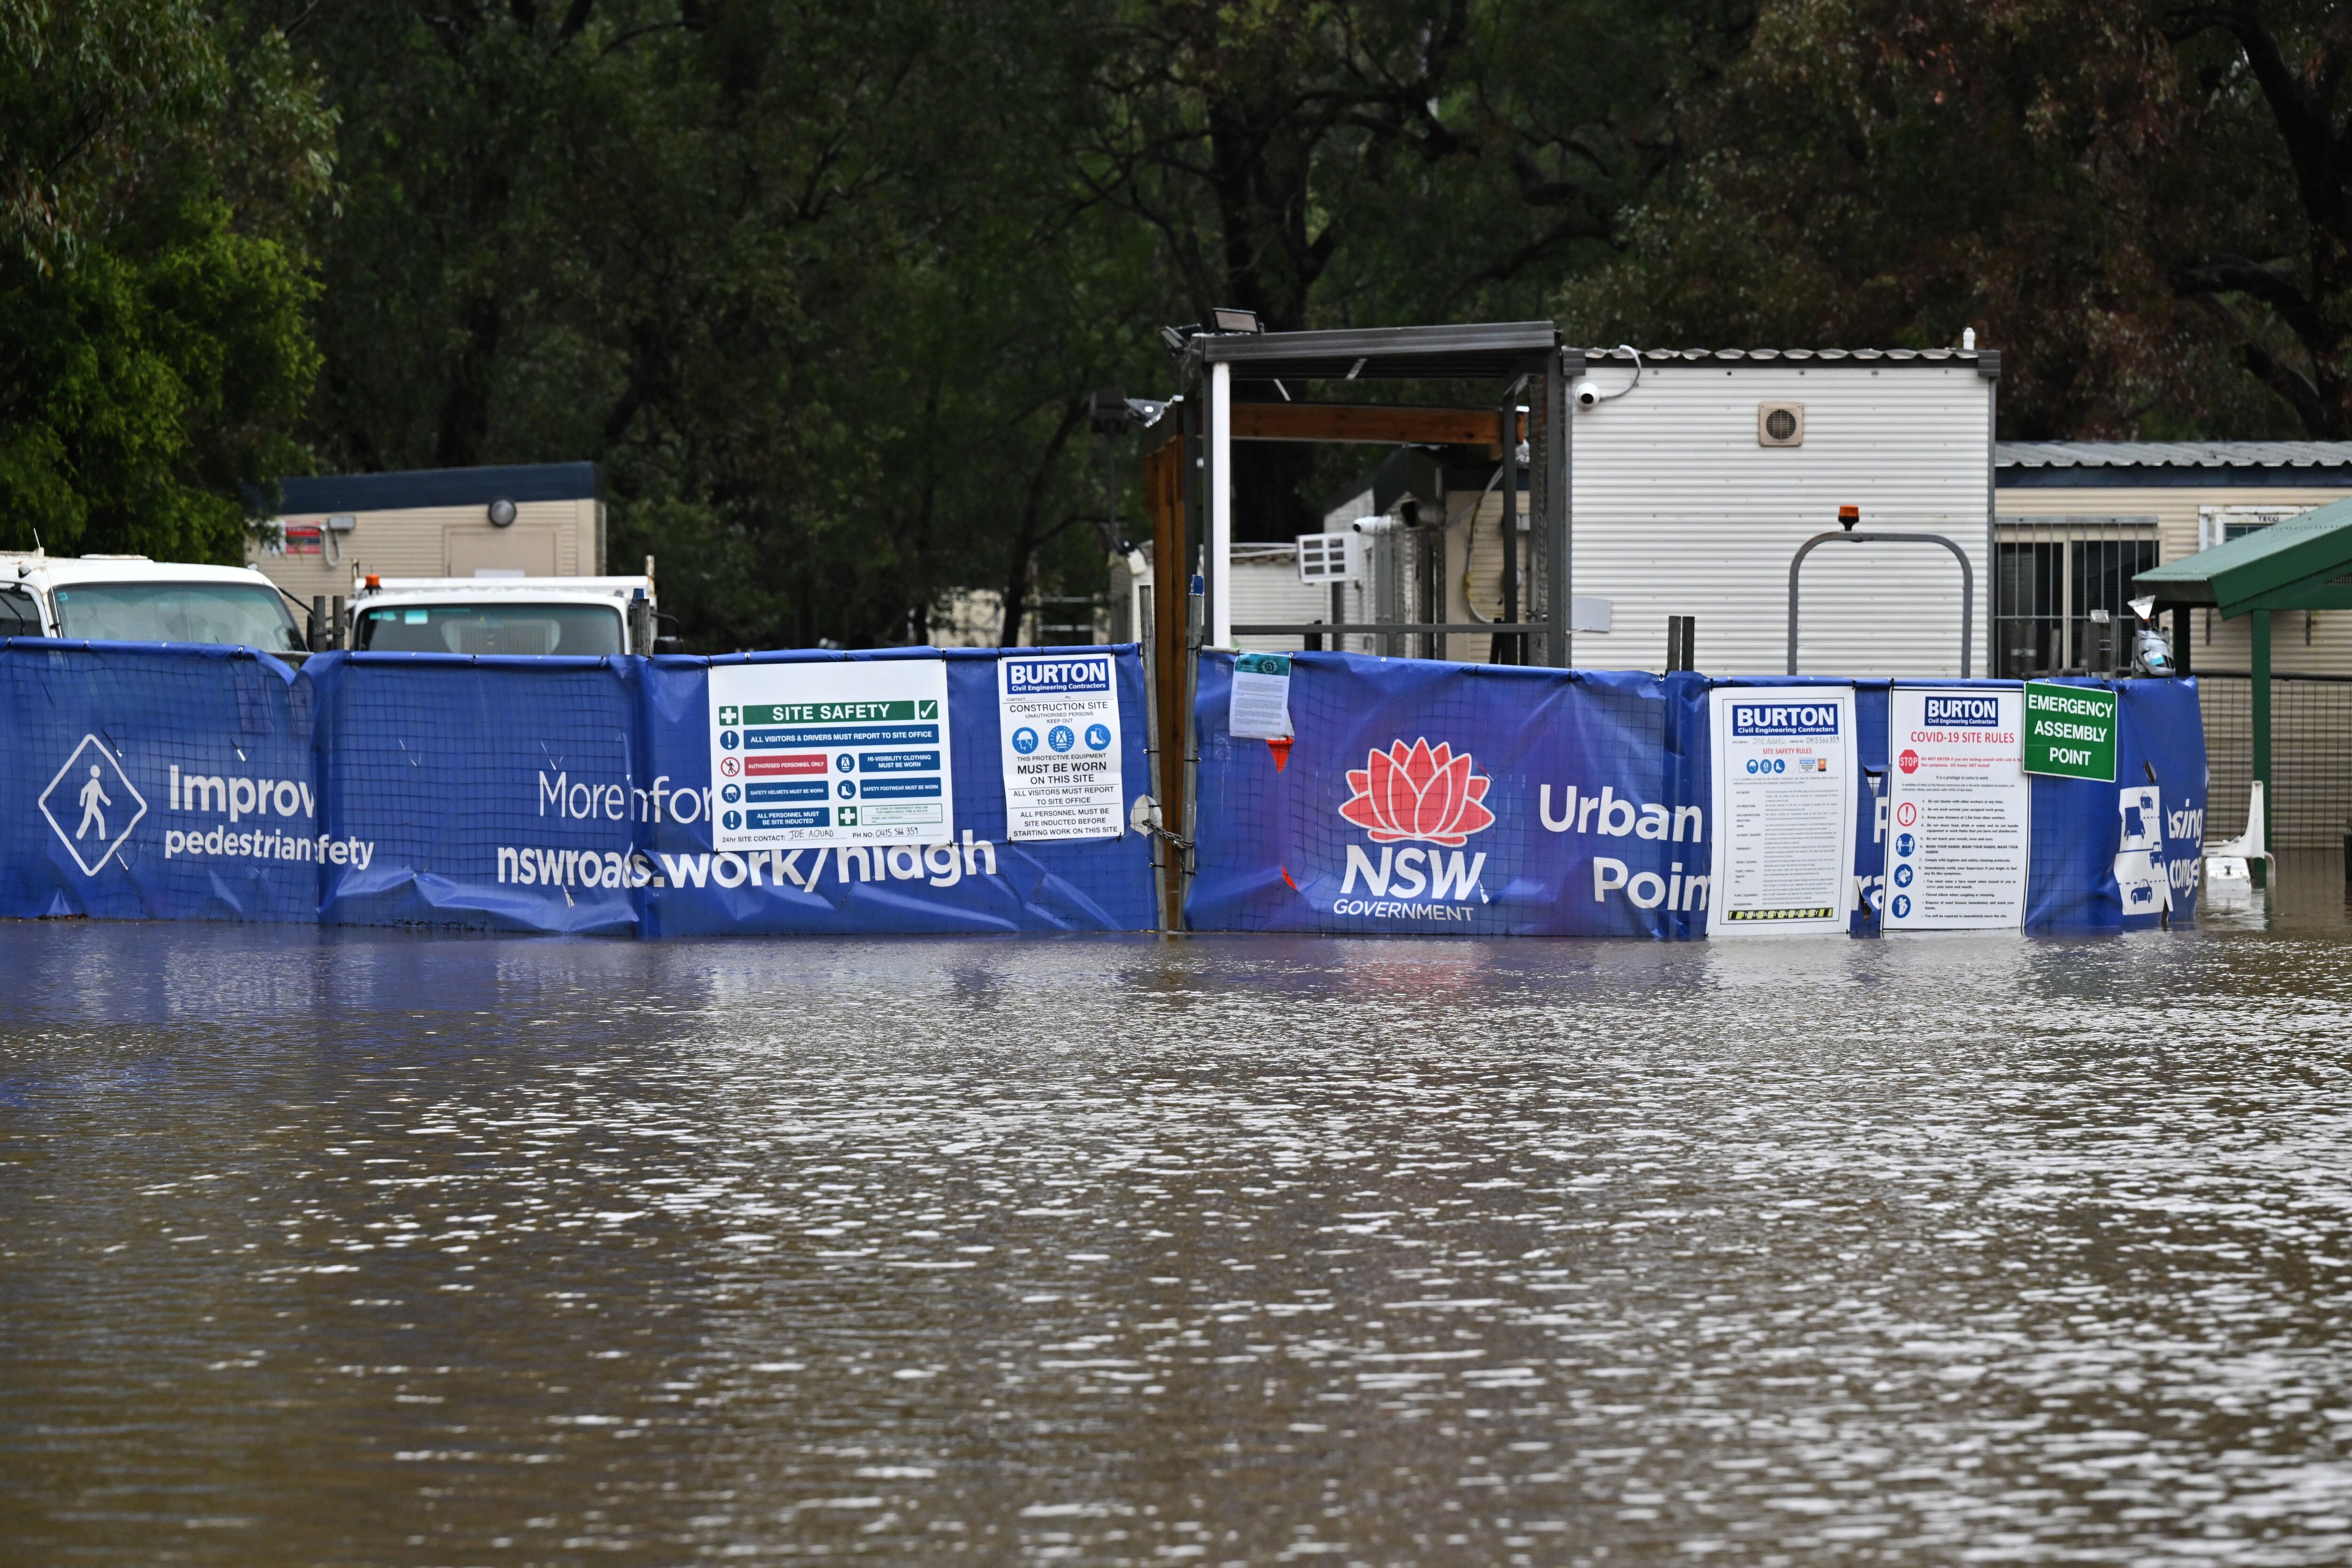 A work site is seen in the flooding in Lansvale in western Sydney, Australia.